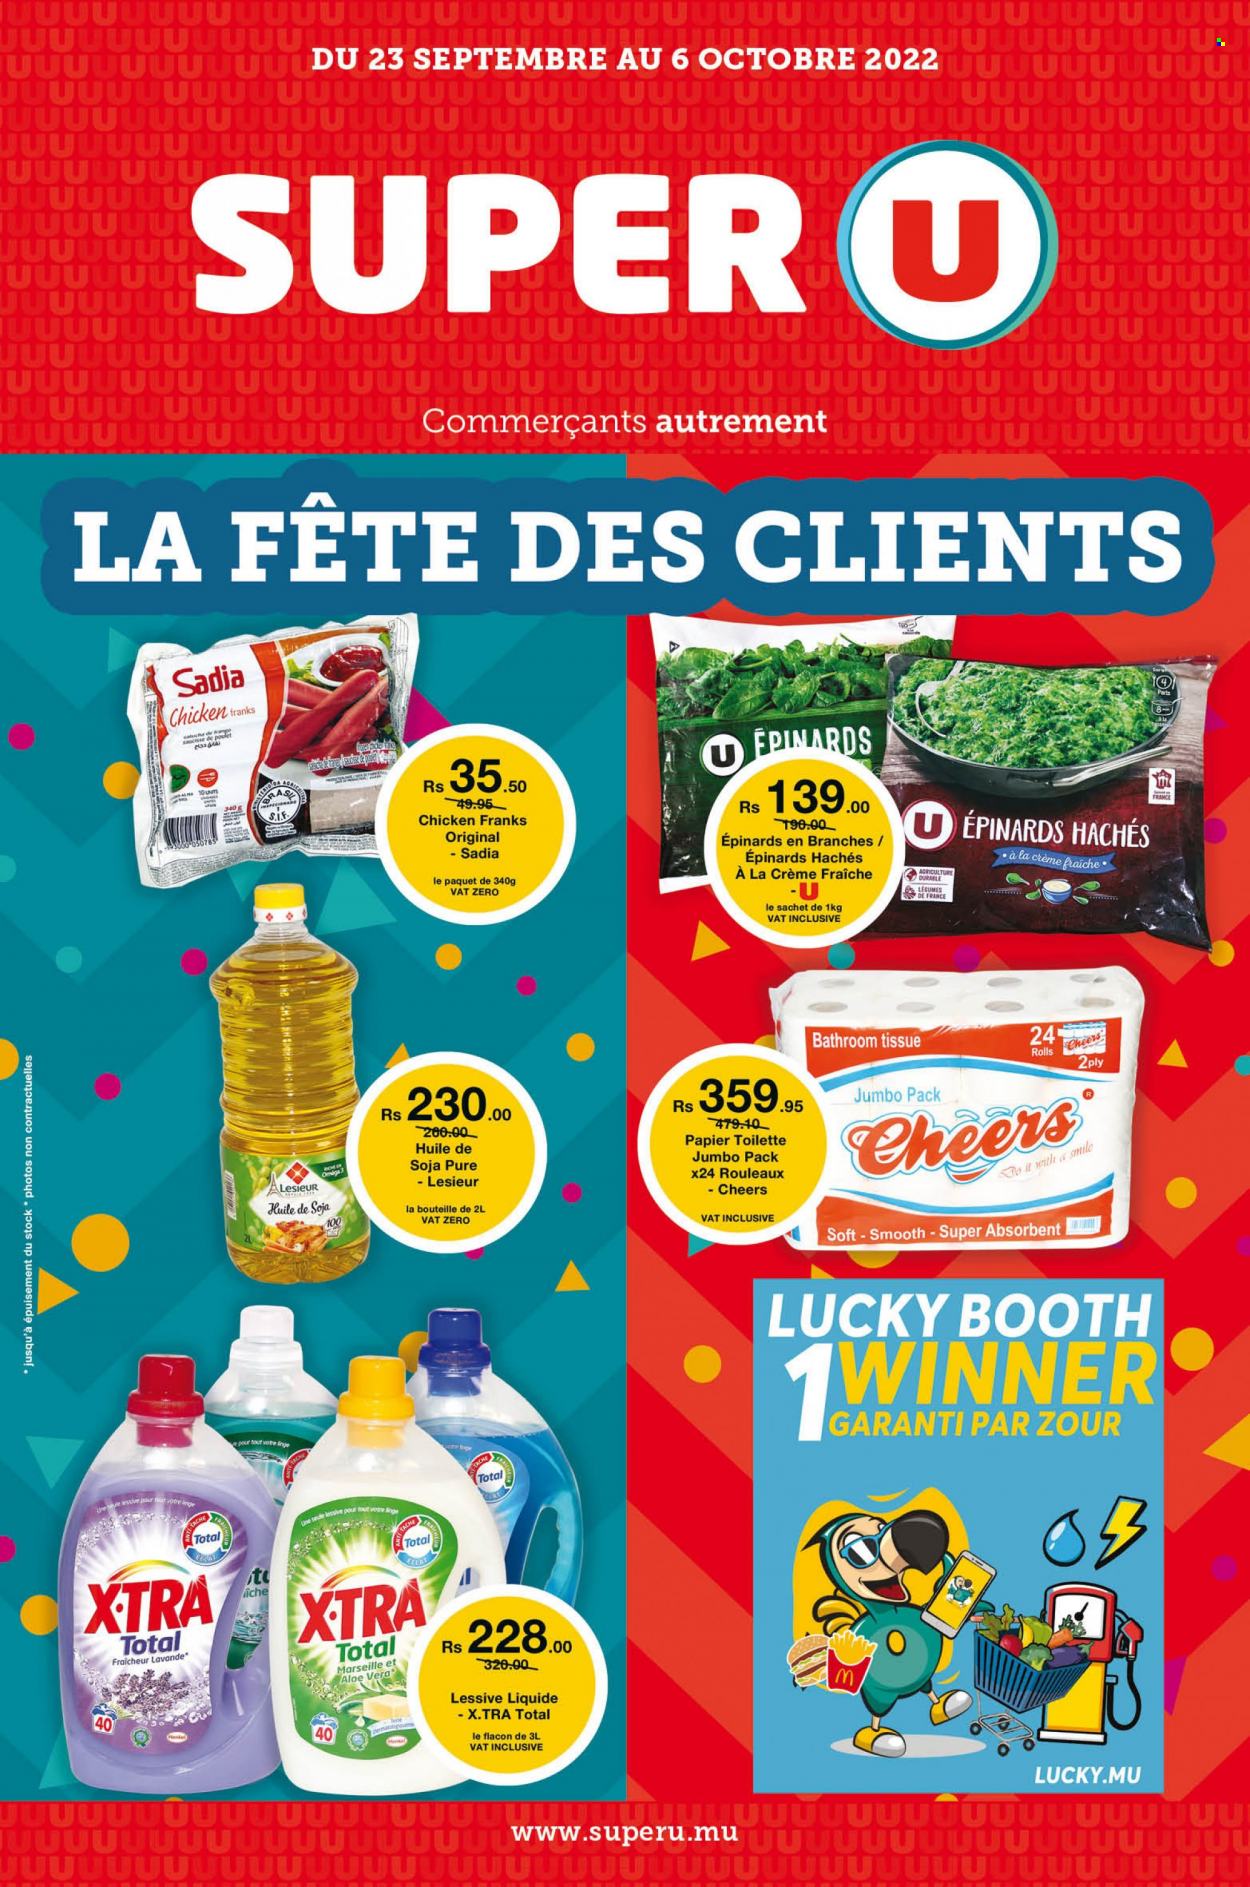 Super U Catalogue - 23.09.2022 - 6.10.2022 - Sales products - chicken franks, crème fraîche, bath tissue, XTRA. Page 1.